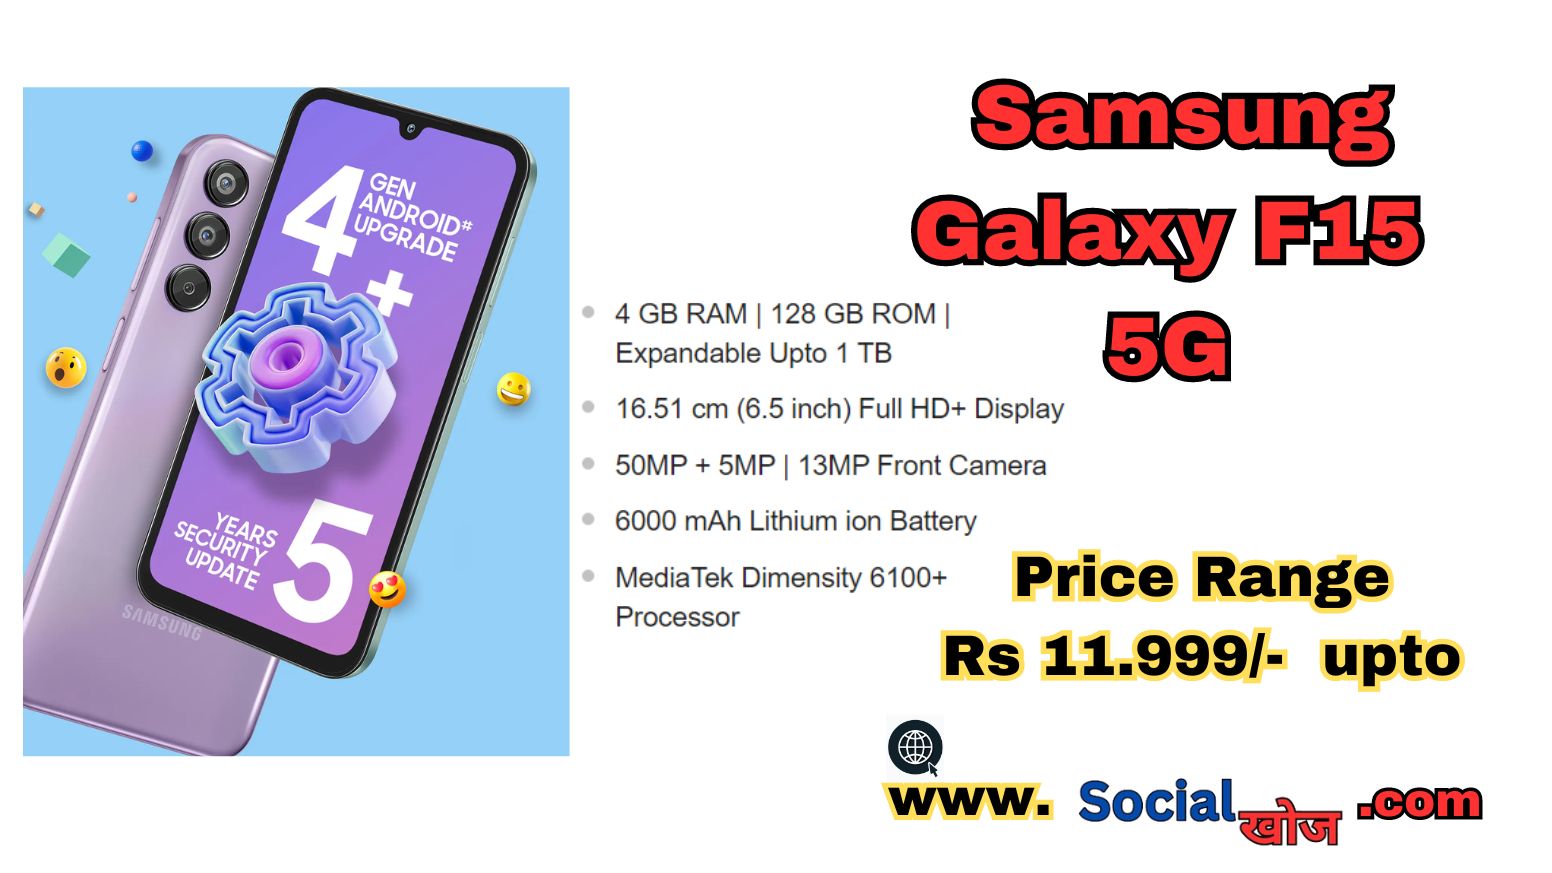 Samsung Galaxy F15 5G image